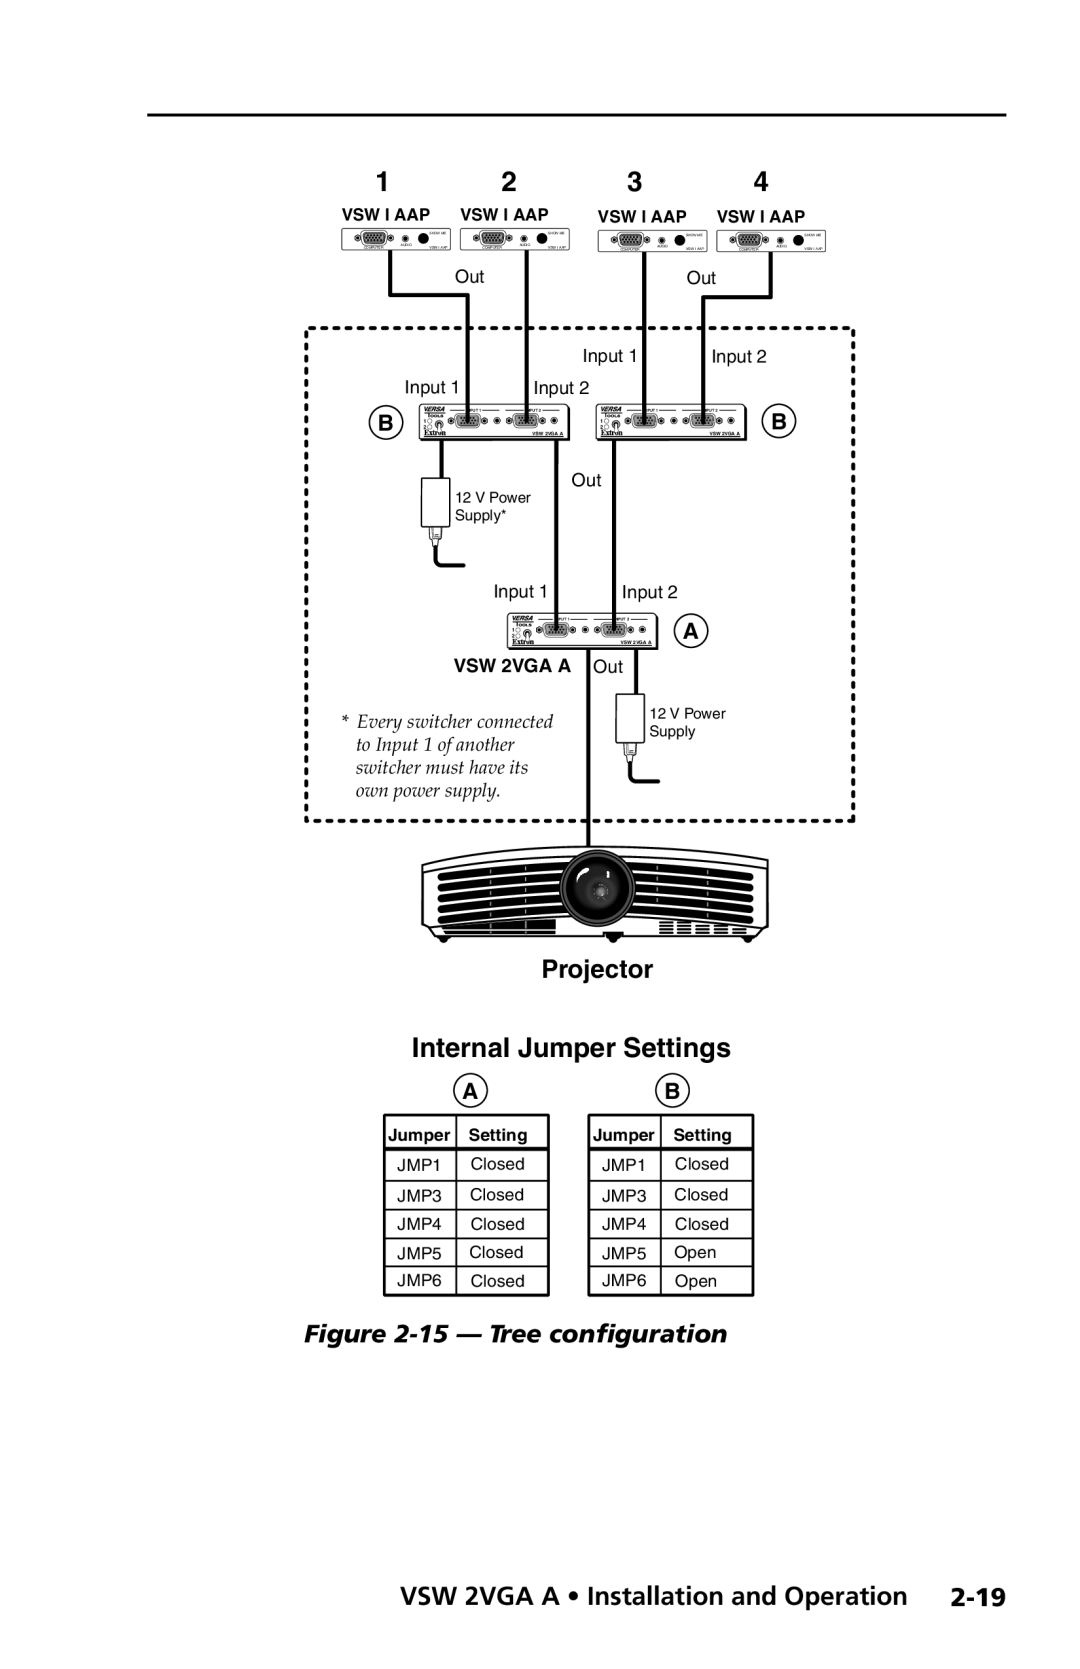 Extron electronic VSW 2VGA A user manual Projector Internal Jumper Settings, 15 - Tree configuration 